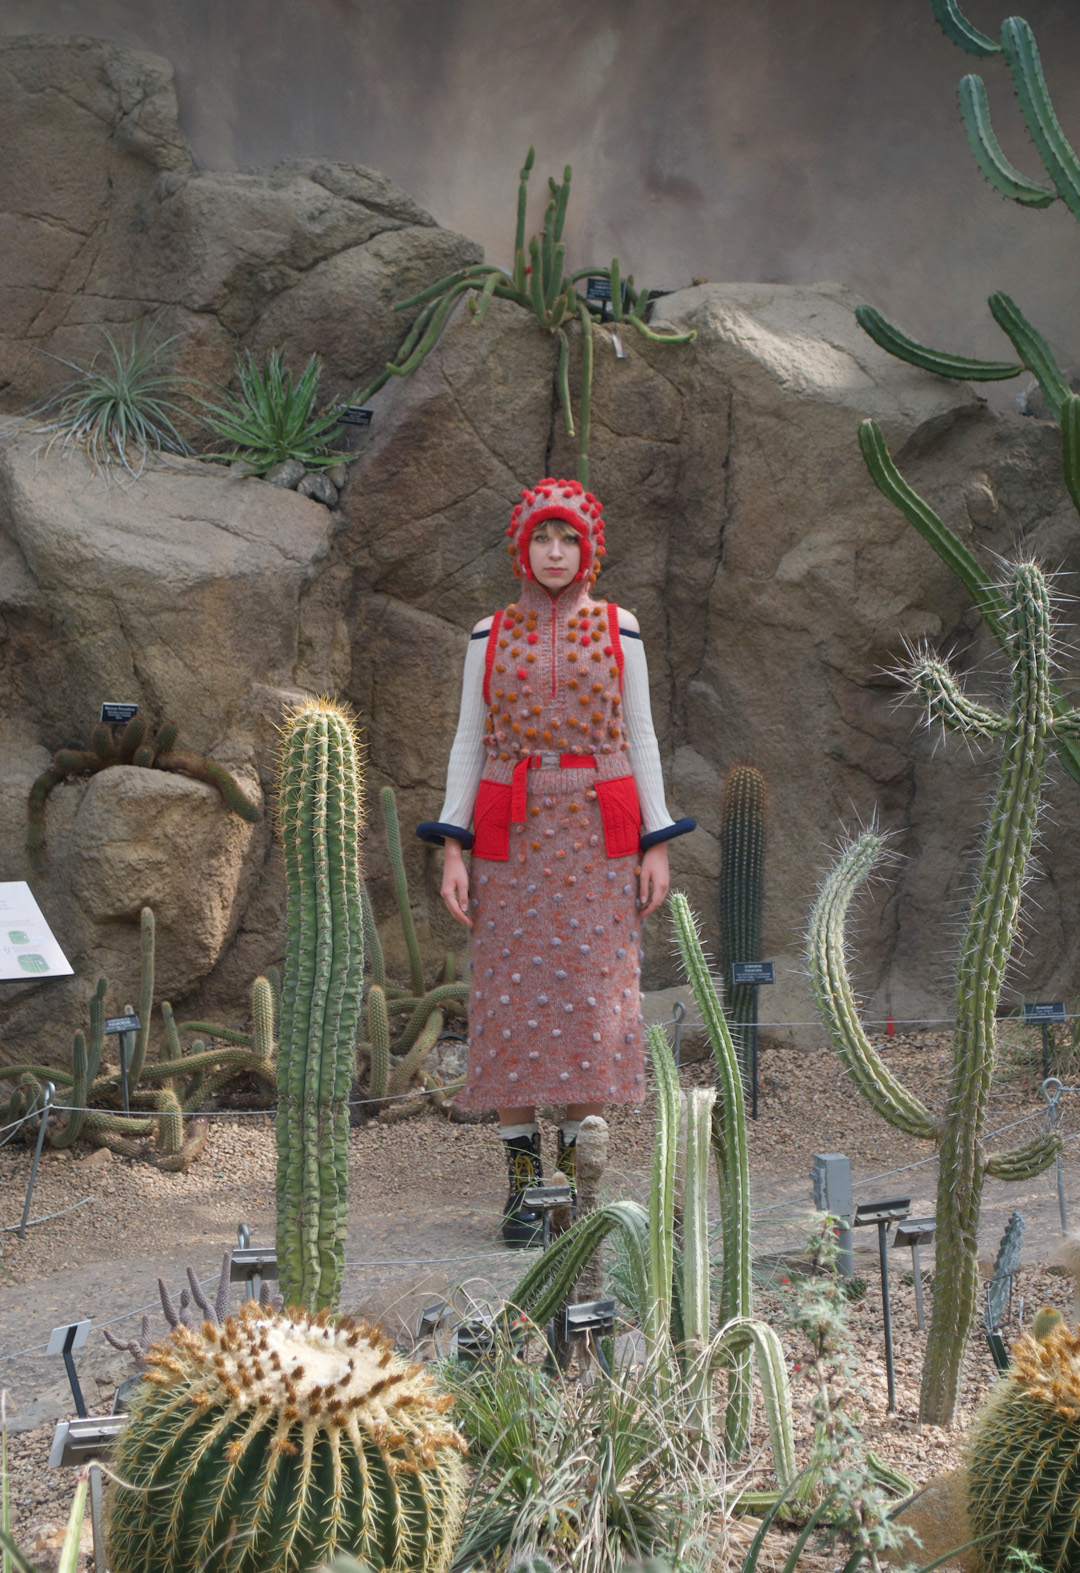 Far away image of a woman in a bobble knit dress standing in a desert landscape.